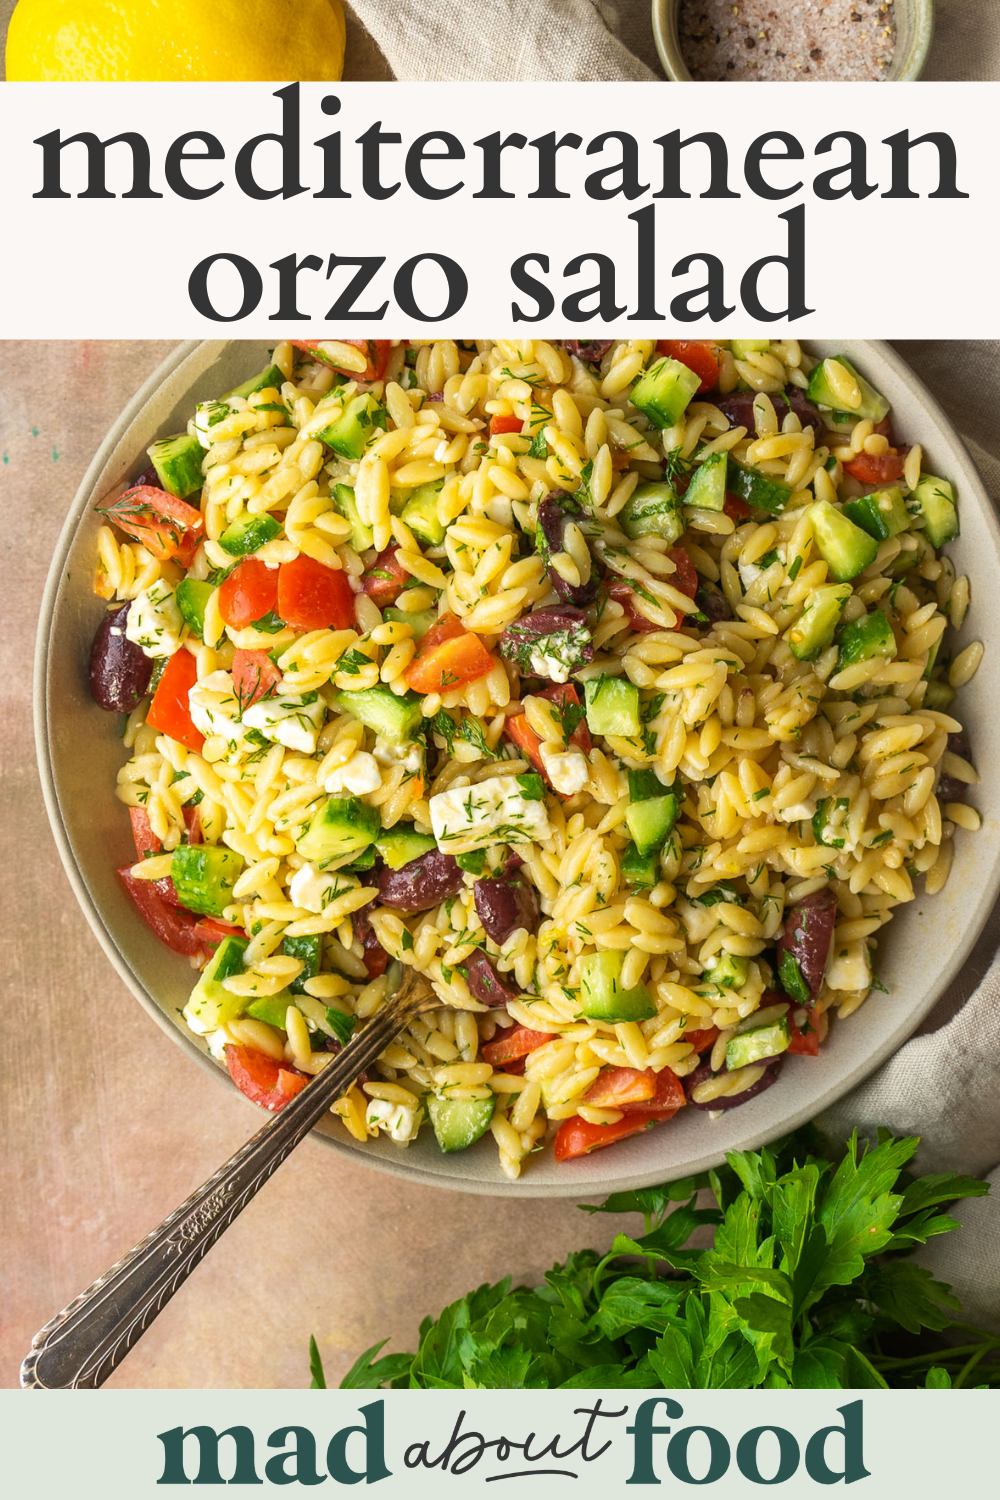 Image for pinning mediterranean orzo salad recipe on pinterest